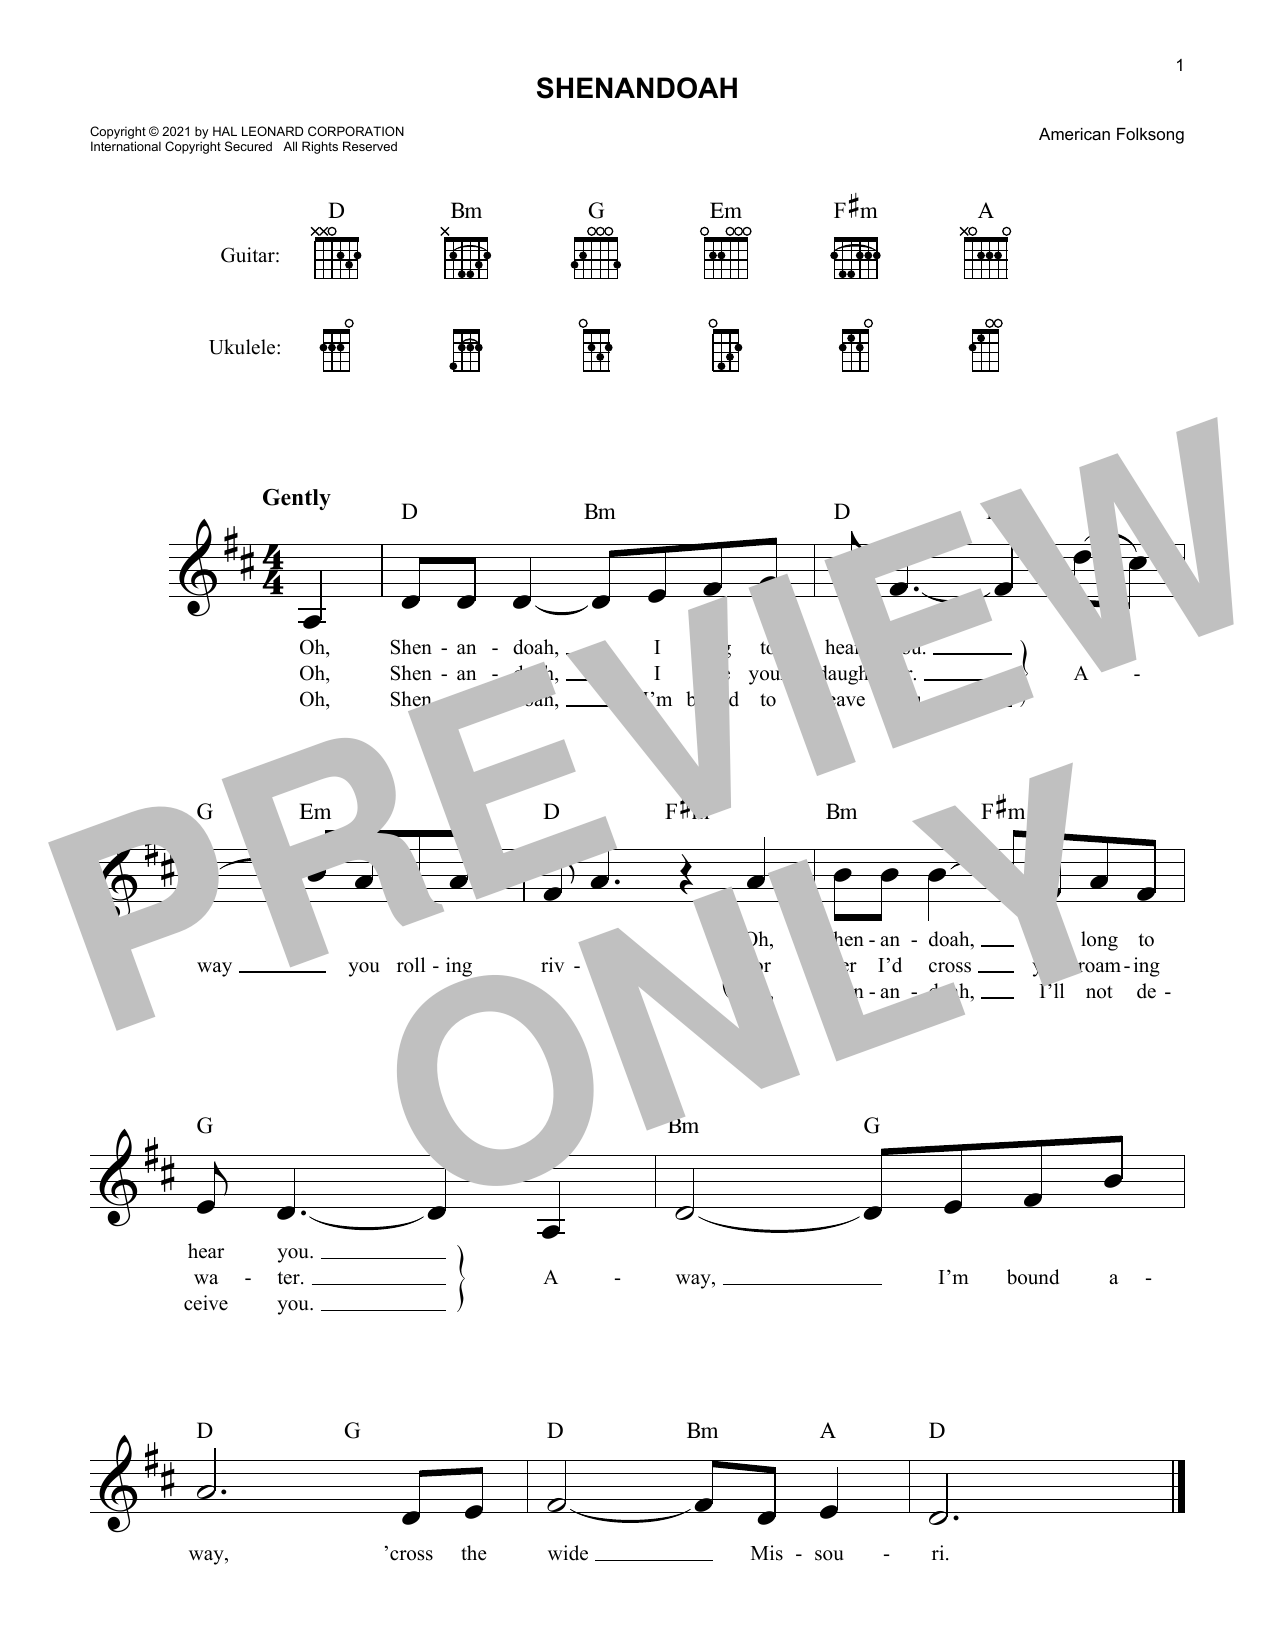 American Folksong Shenandoah sheet music notes and chords. Download Printable PDF.